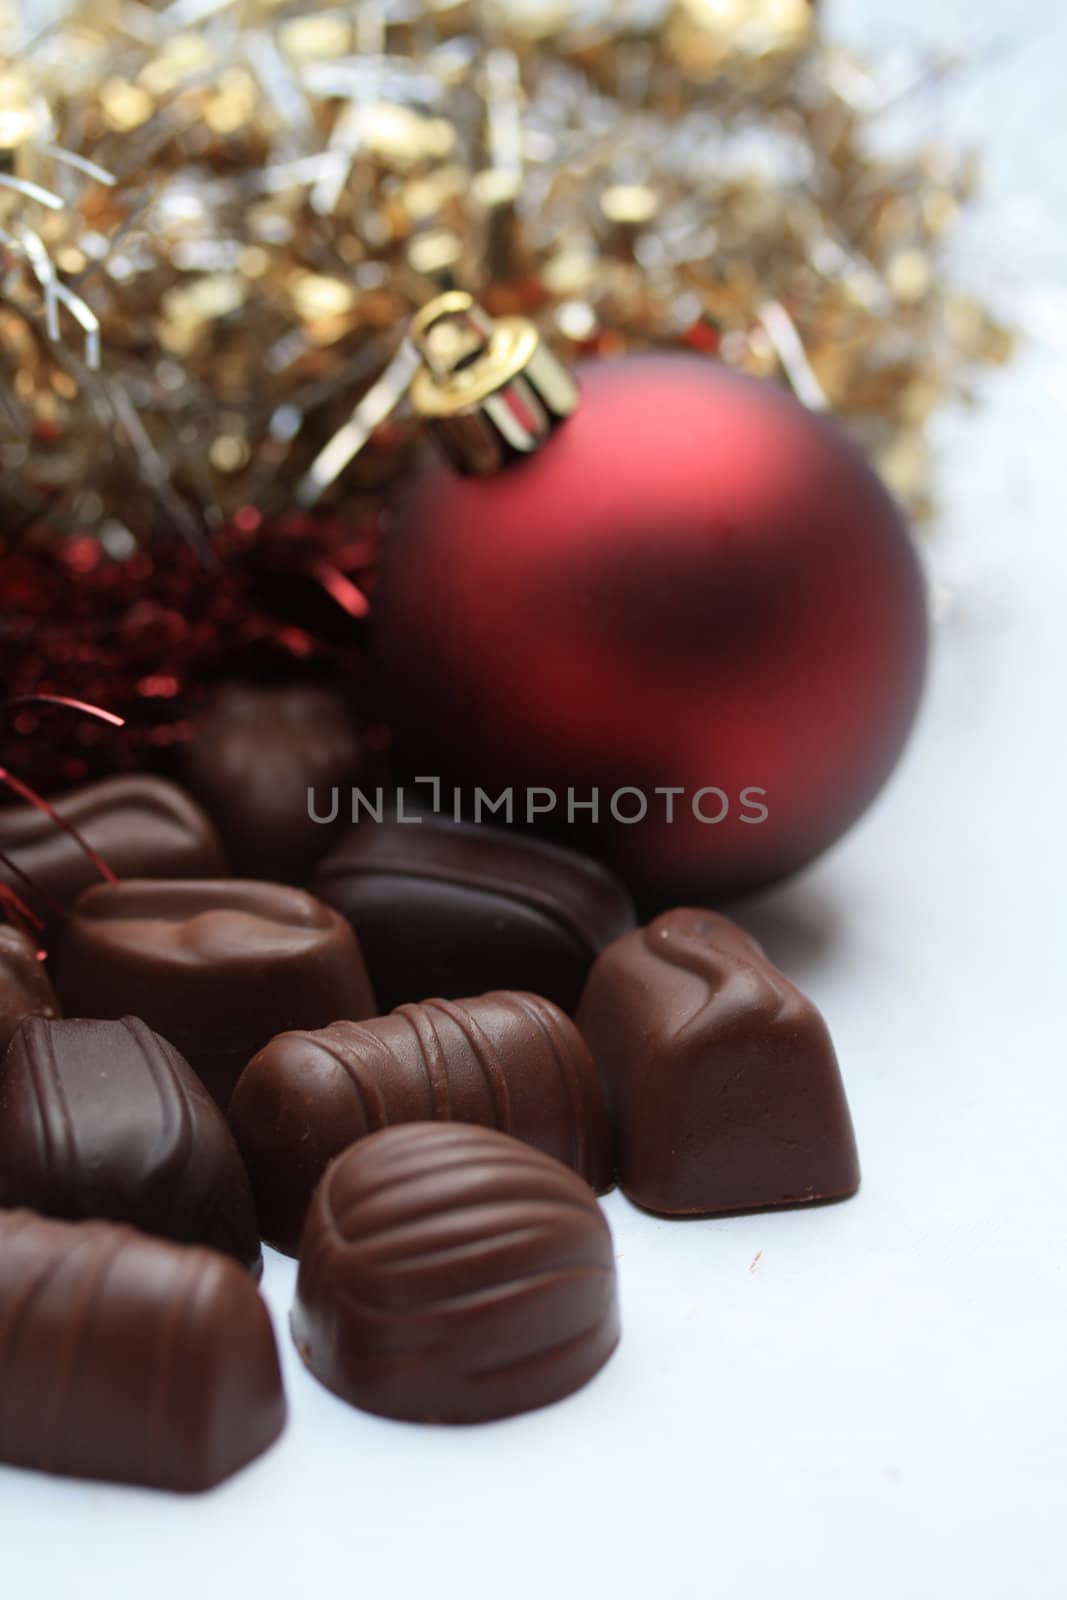 Christmas chocolates by studioportosabbia